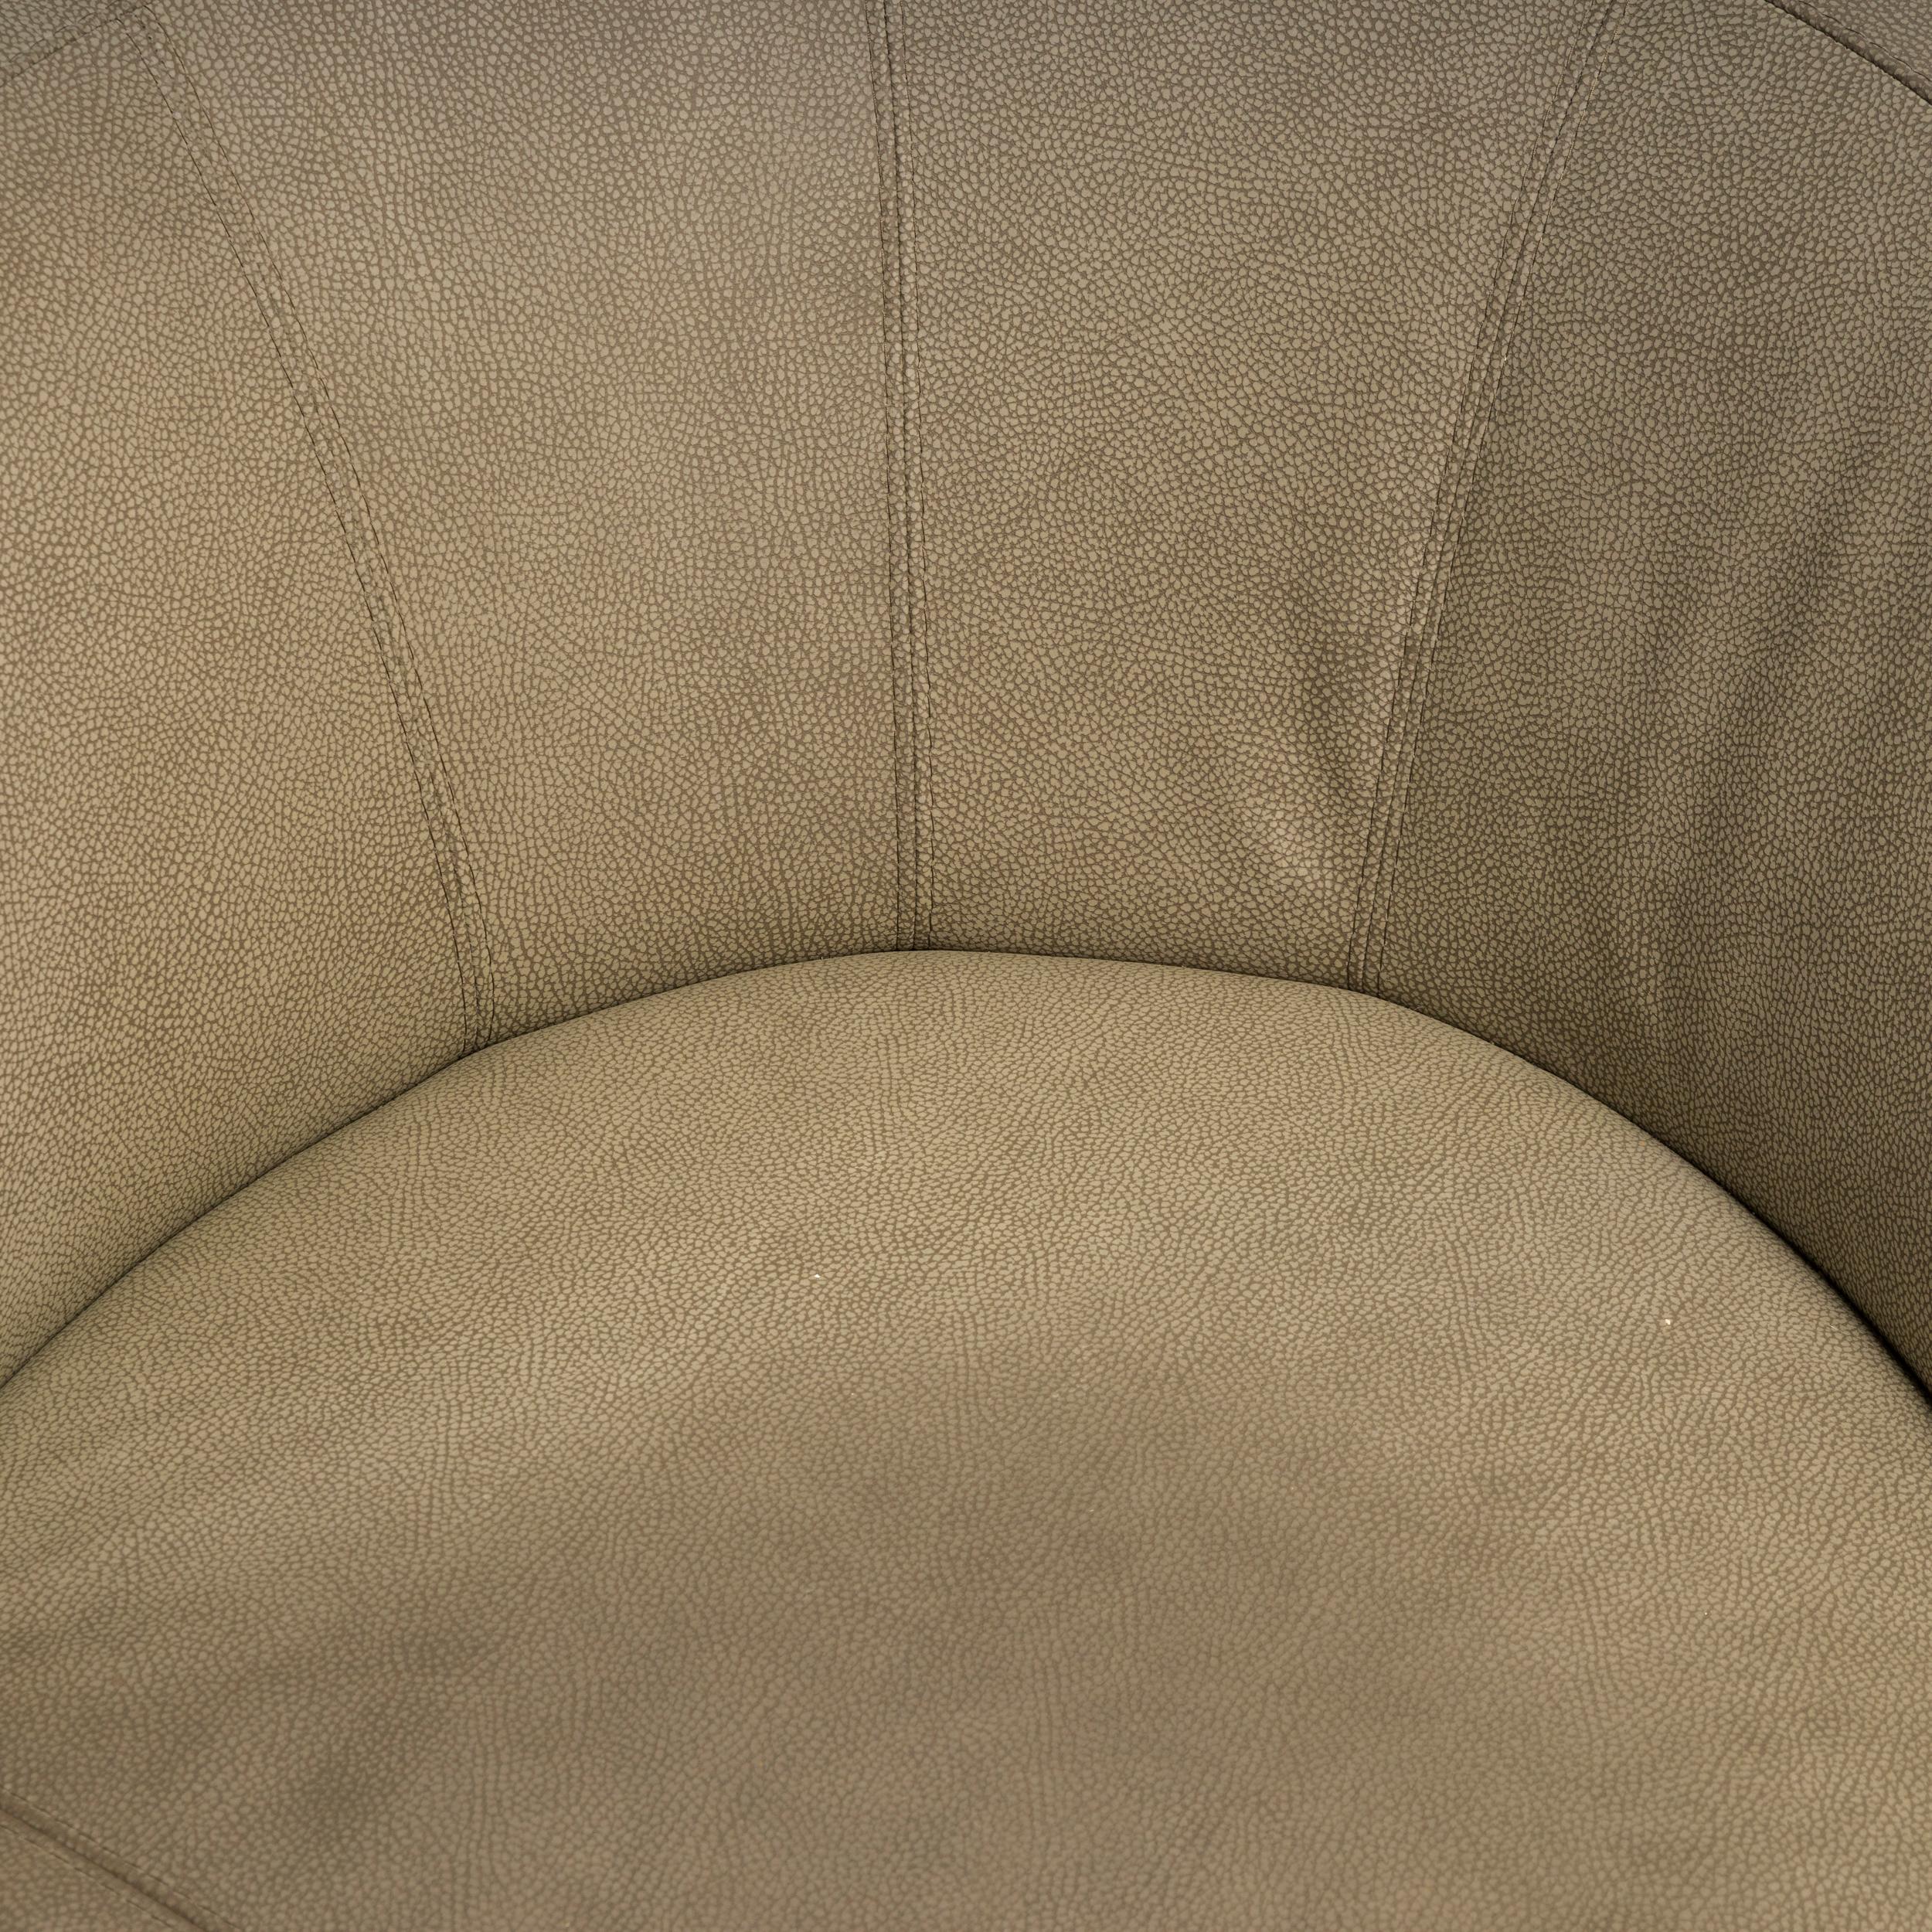 Roche Bobois by Gabriele Assmann & Alfred Kleene Leather Digital Curved Sofa For Sale 7